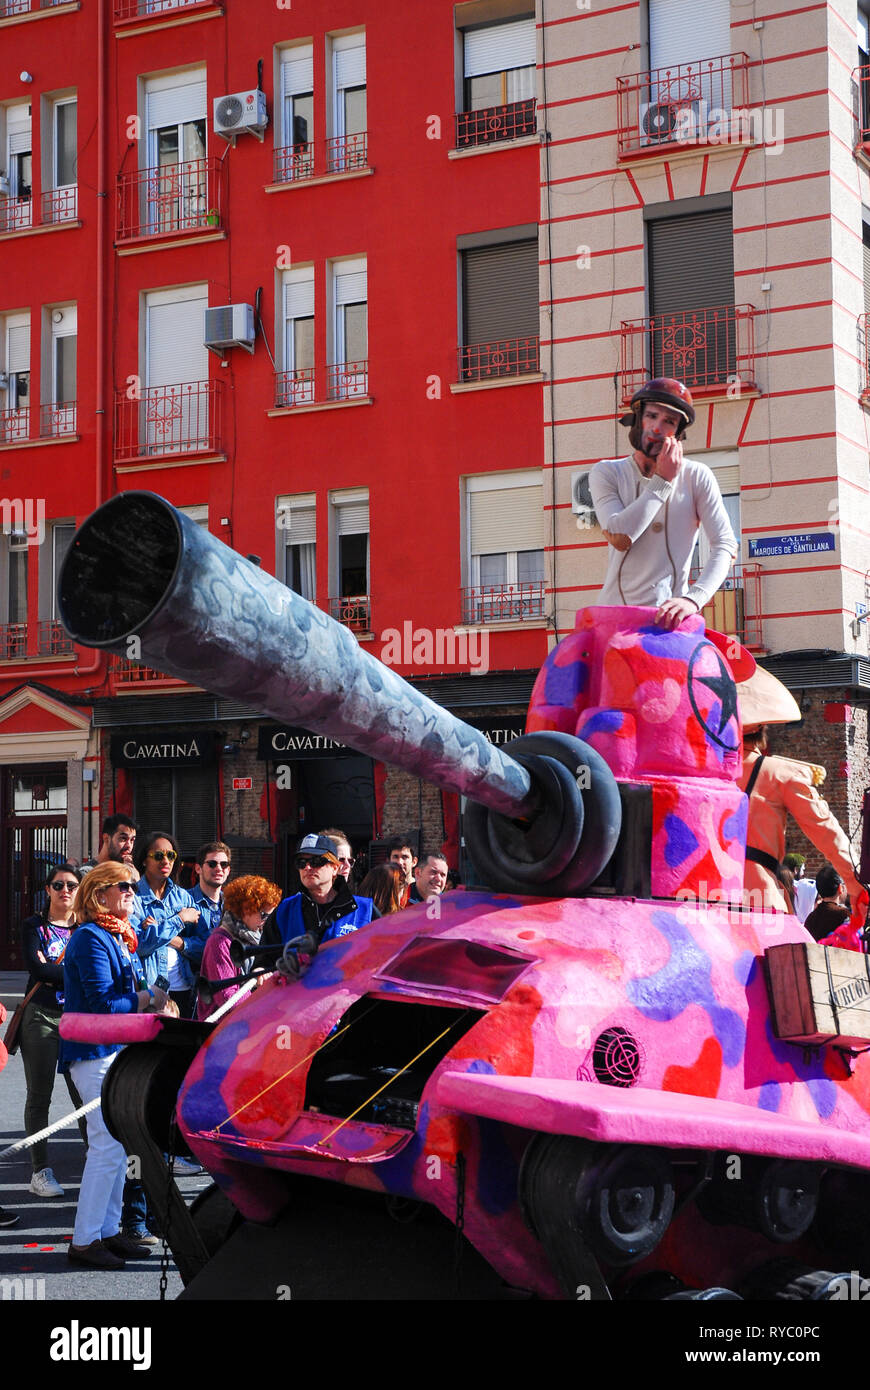 https://c8.alamy.com/comp/RYC0PC/madrid-spain-march-2nd-2019-carnival-parade-disguised-man-posing-inside-fake-pink-tank-RYC0PC.jpg